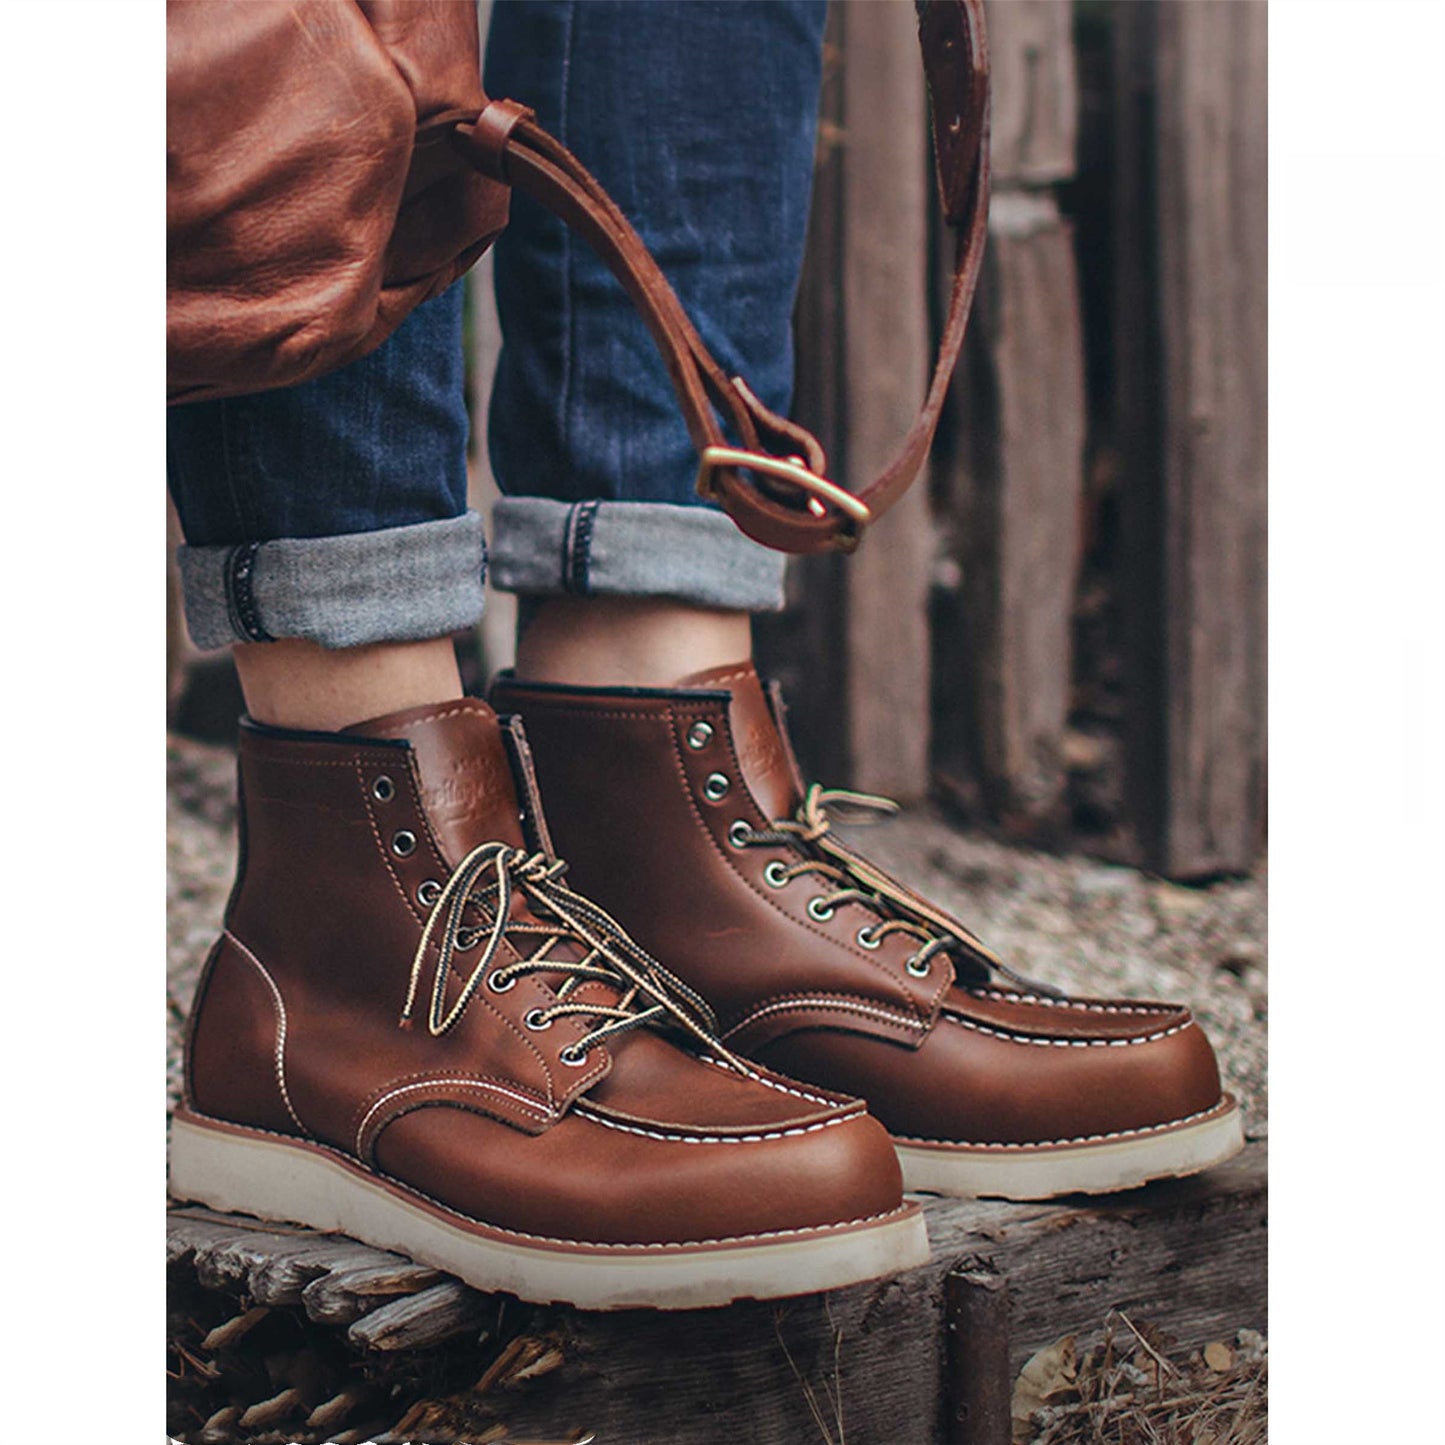 Explorer's Vanguard Leather Boots